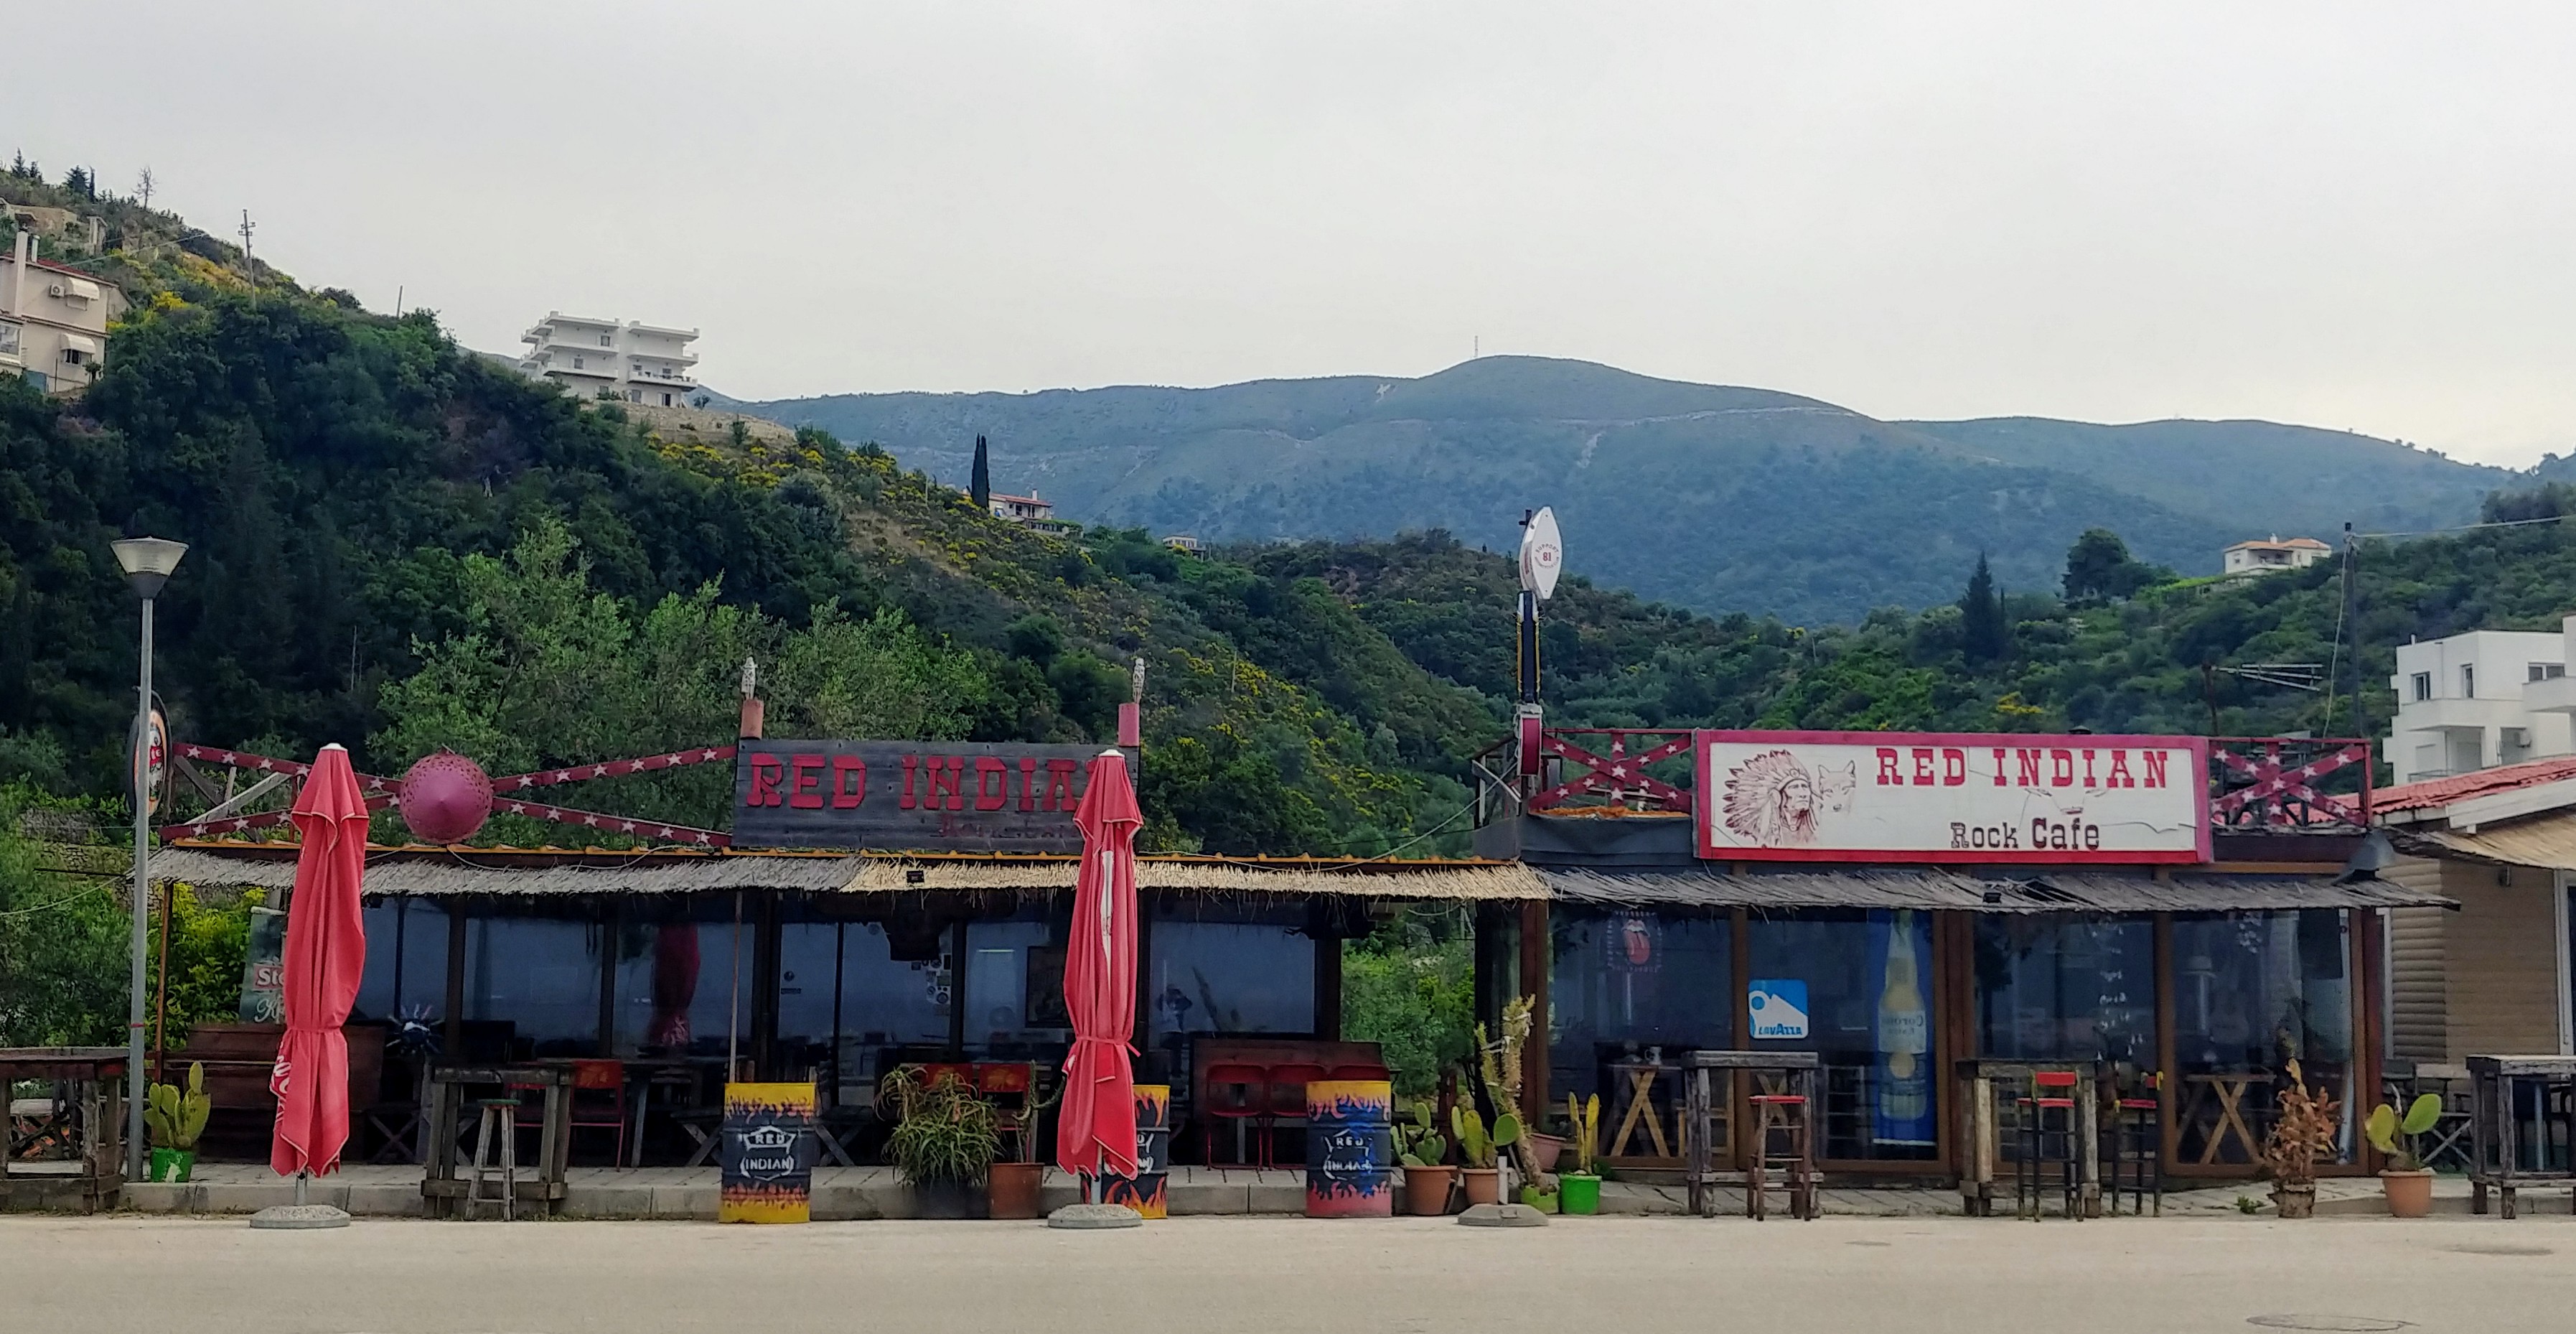 Red Indian Rock Cafe à Himarë, Albanie